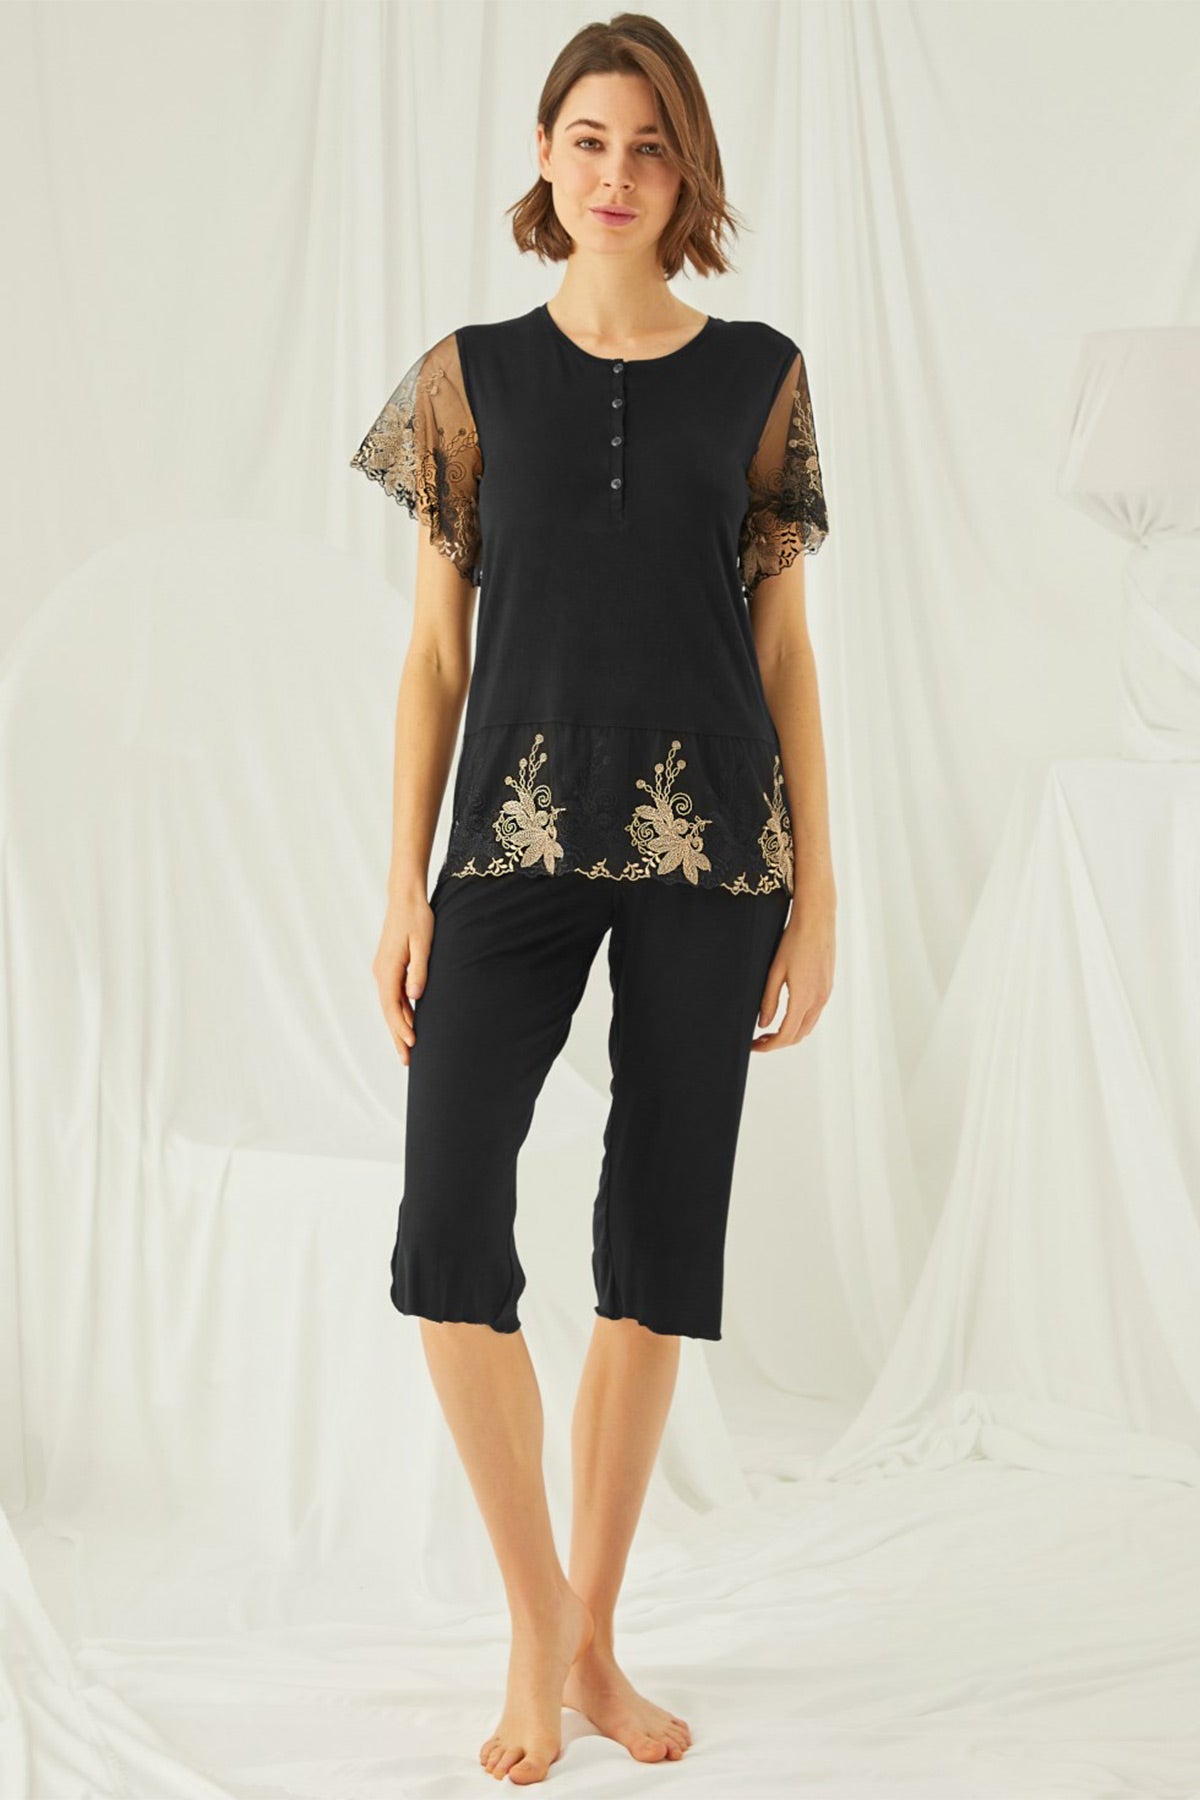 Shopymommy 19172 Lace Plus Size Capri Maternity & Nursing Pajamas Black